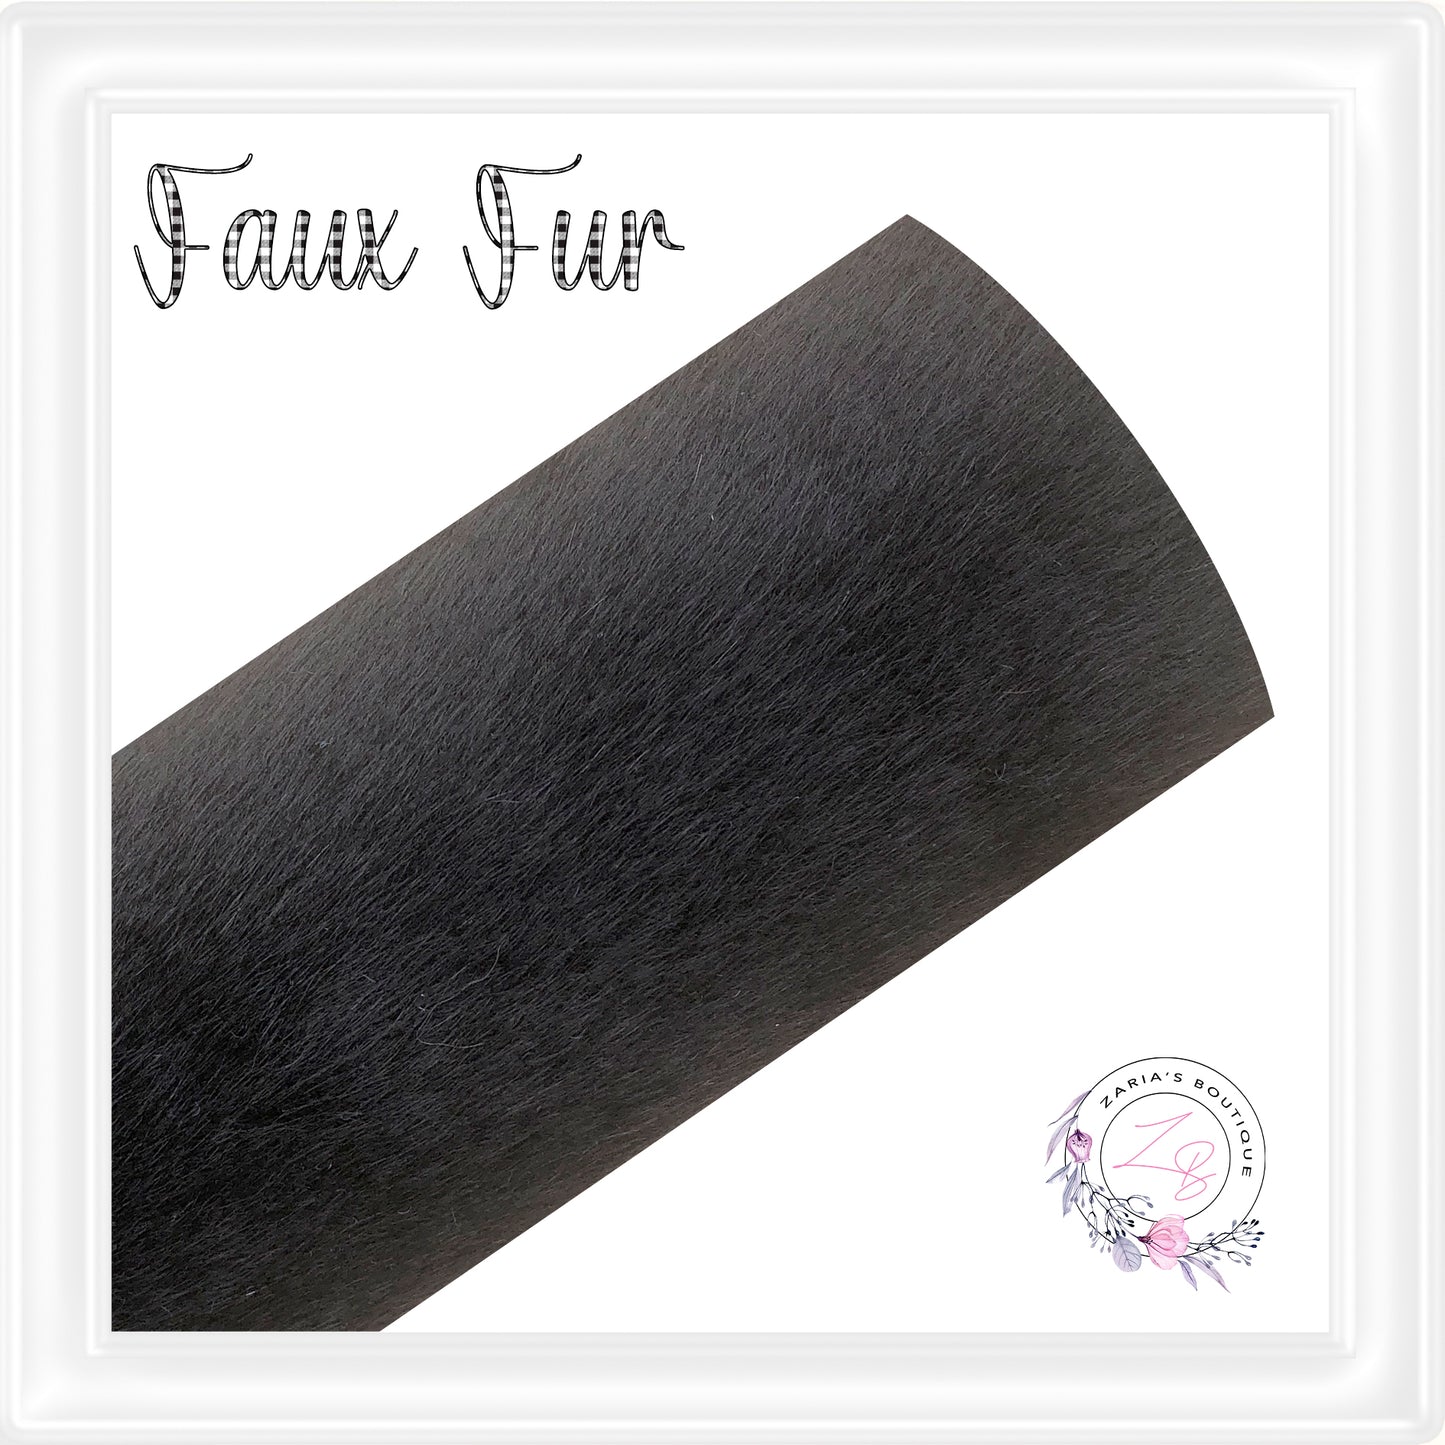 ⋅ Faux Fur ⋅ Horse Hair Textured Bow & Craft Fabric ⋅ Black ⋅